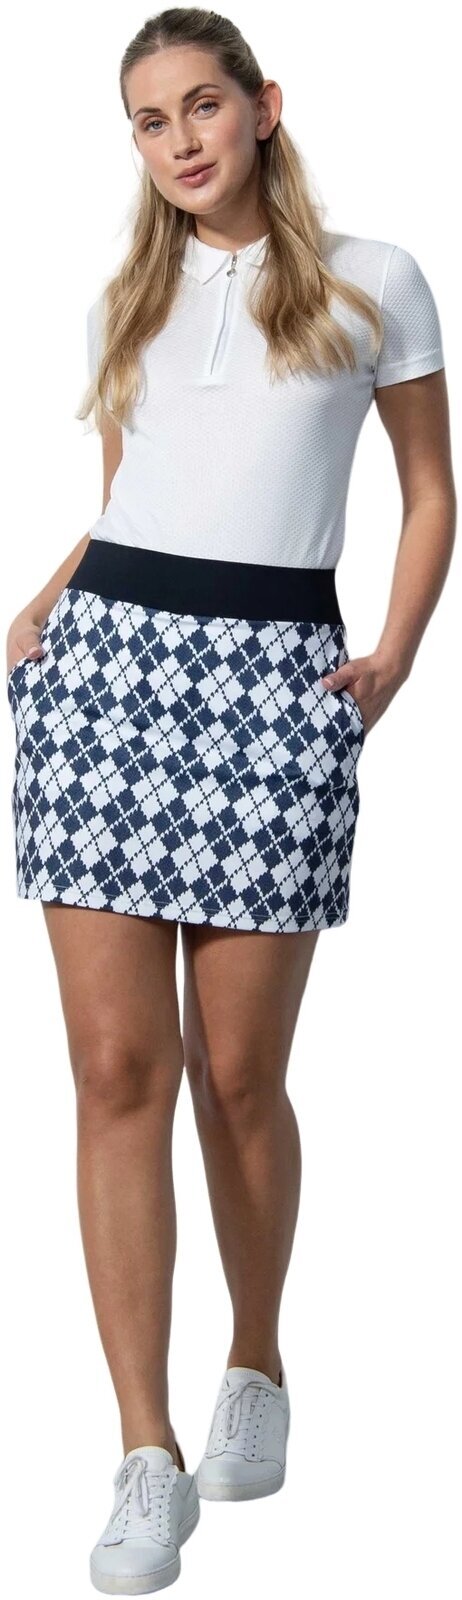 Skirt / Dress Daily Sports Abruzzo Skort 45 cm Argyle L